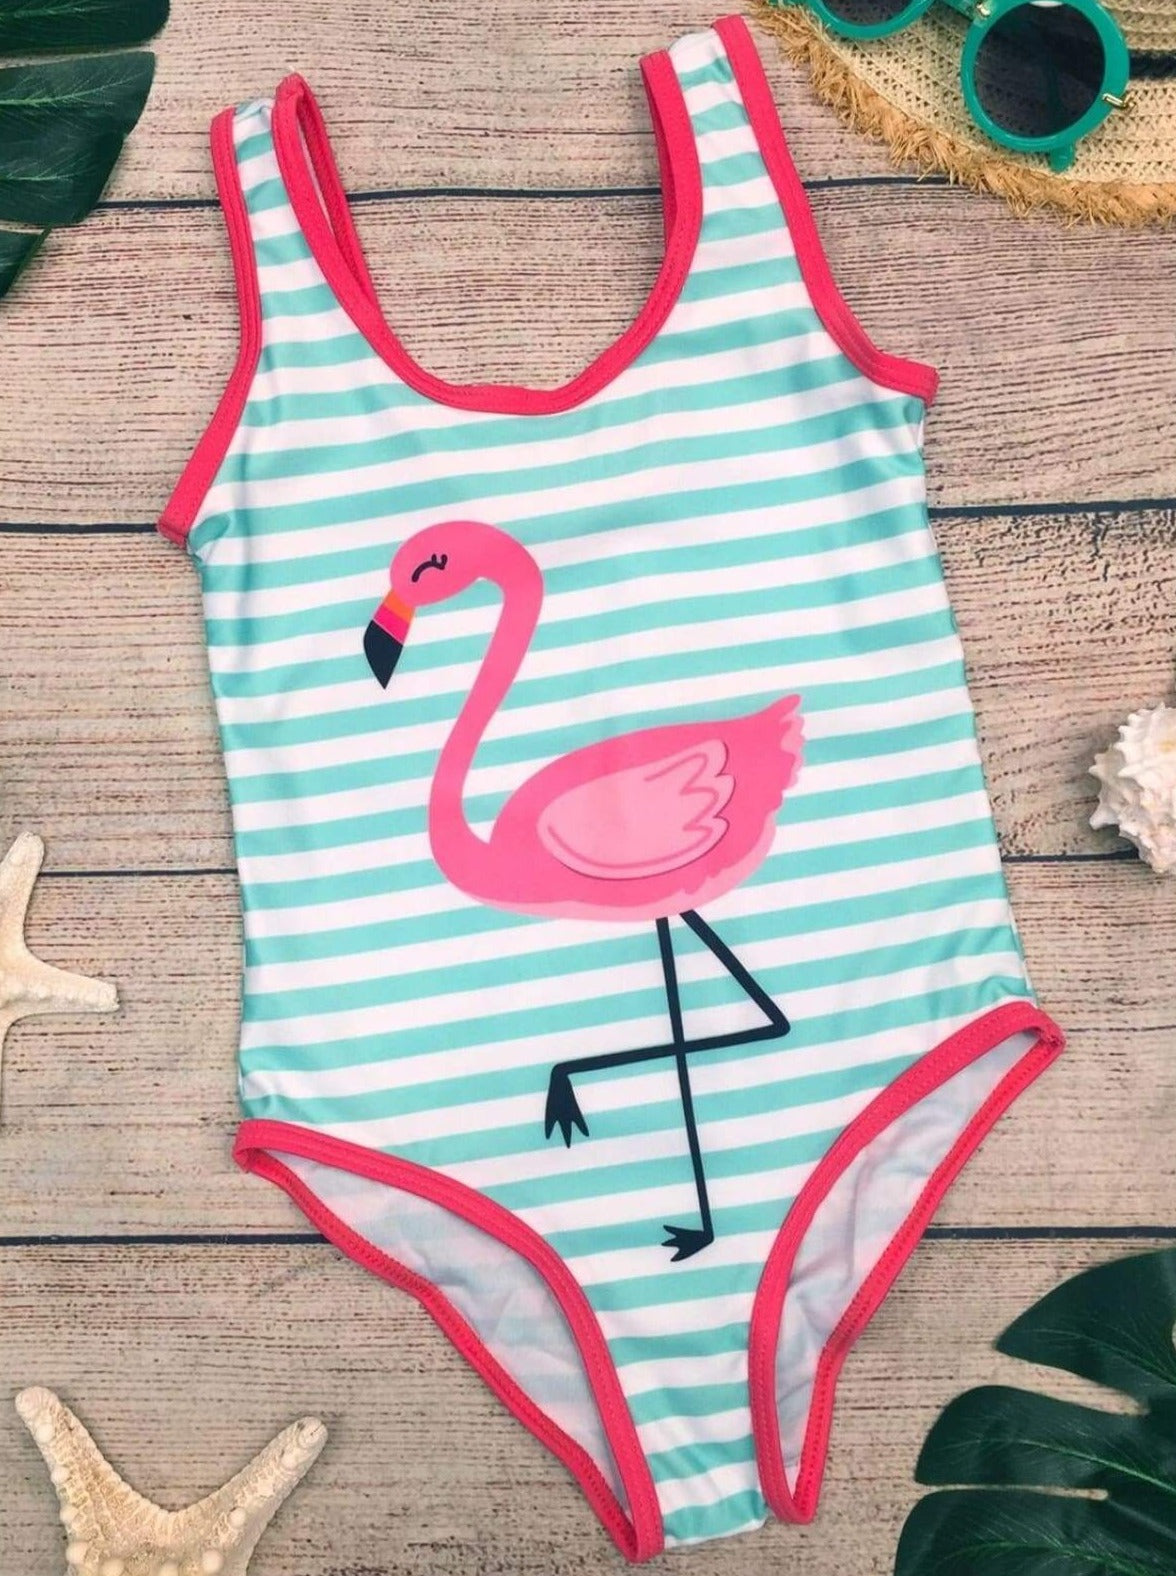 Girls Blue Striped Flamingo One Piece Swimsuit - Girls One Piece Swimsuit